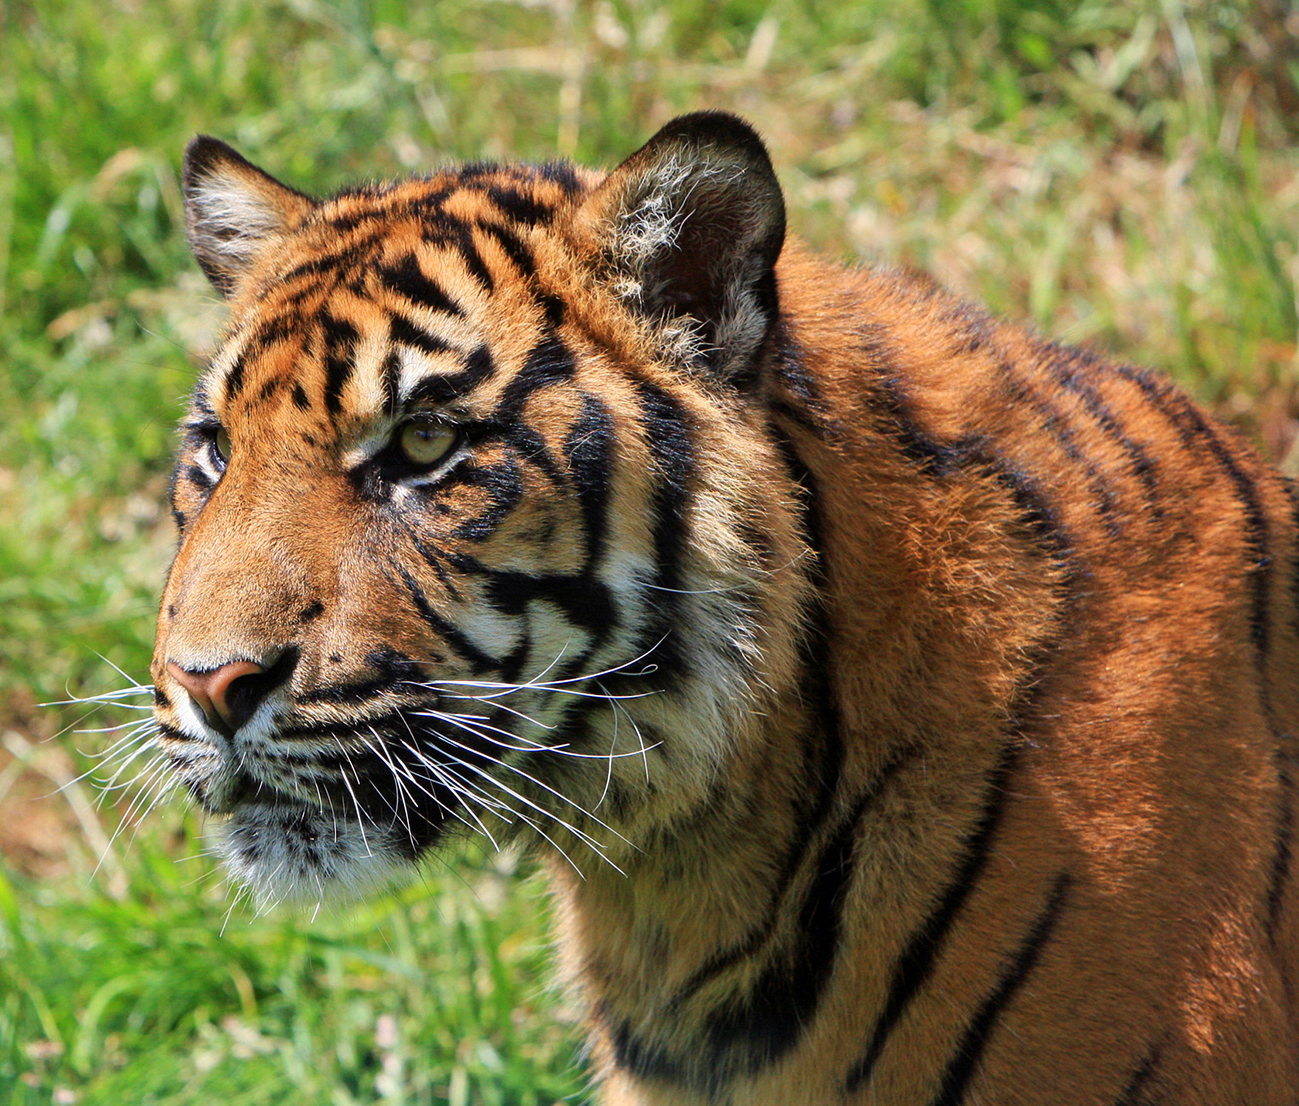 tiger image close up